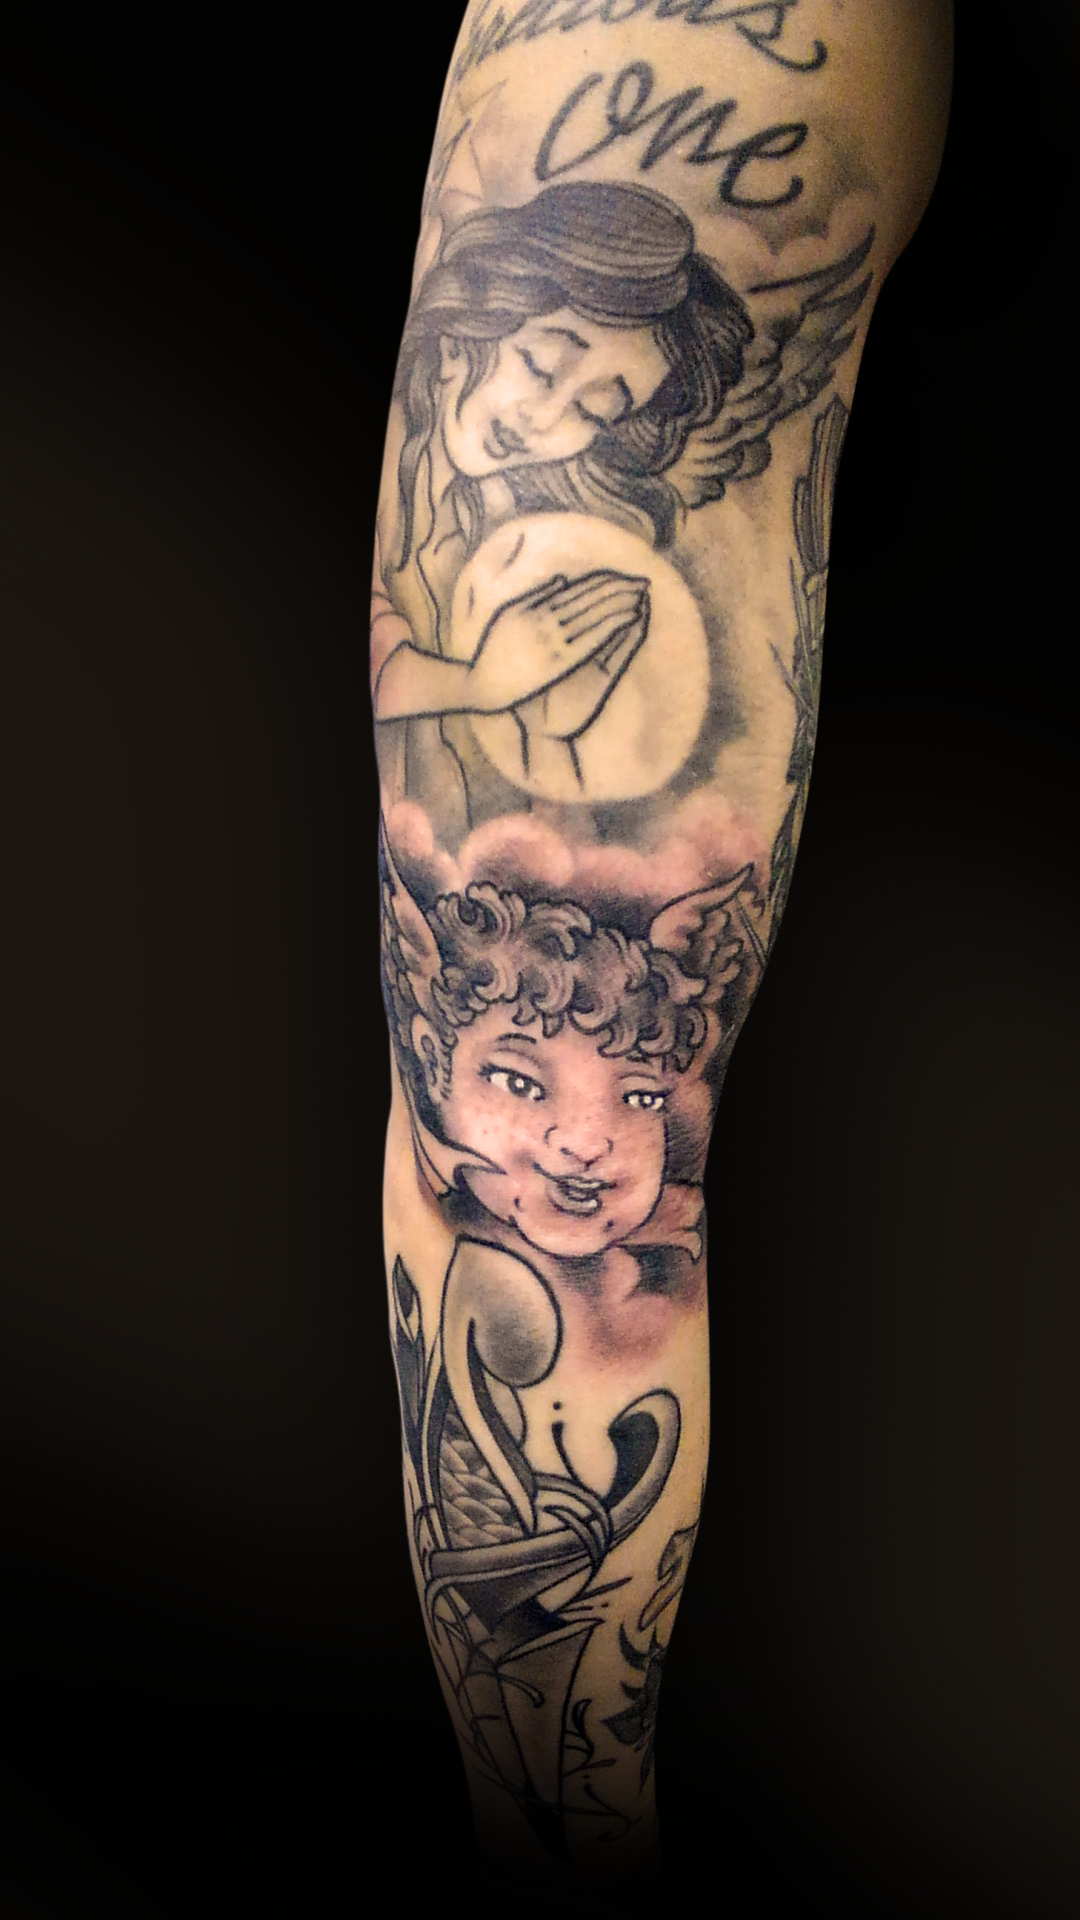 KINGRAT TATTOO 作品 | LAVA gallery | Tattoo artist: Yuji Anai | キングラット | ラバギャラリー | タトゥーアート | 福岡県北九州市 | krt_black_30